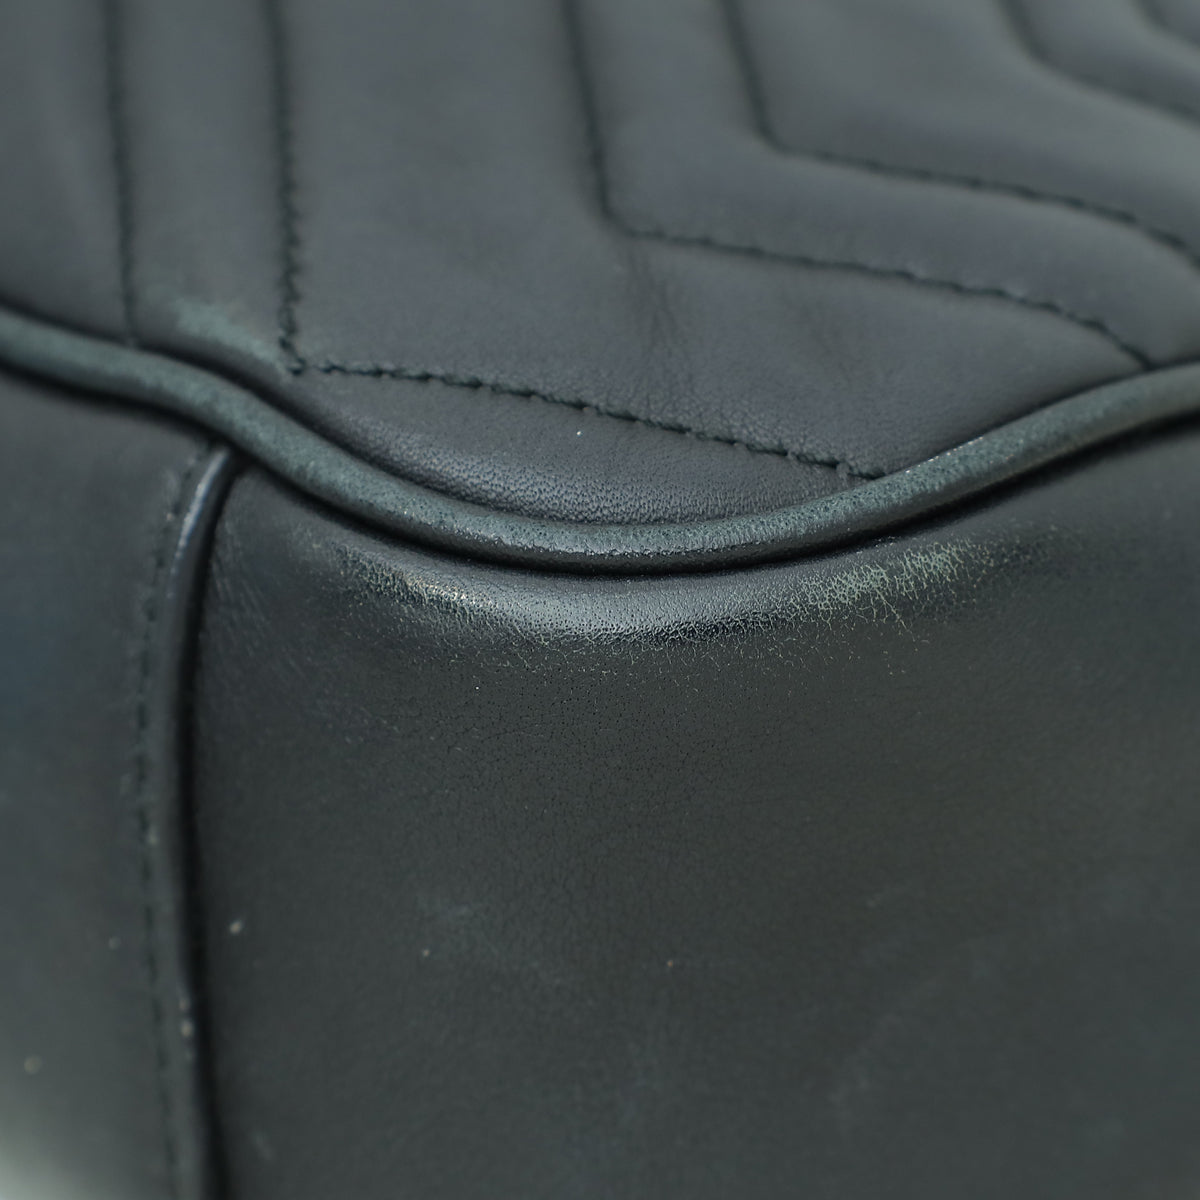 Gucci Black GG Marmont Matelasse Medium Shoulder Bag